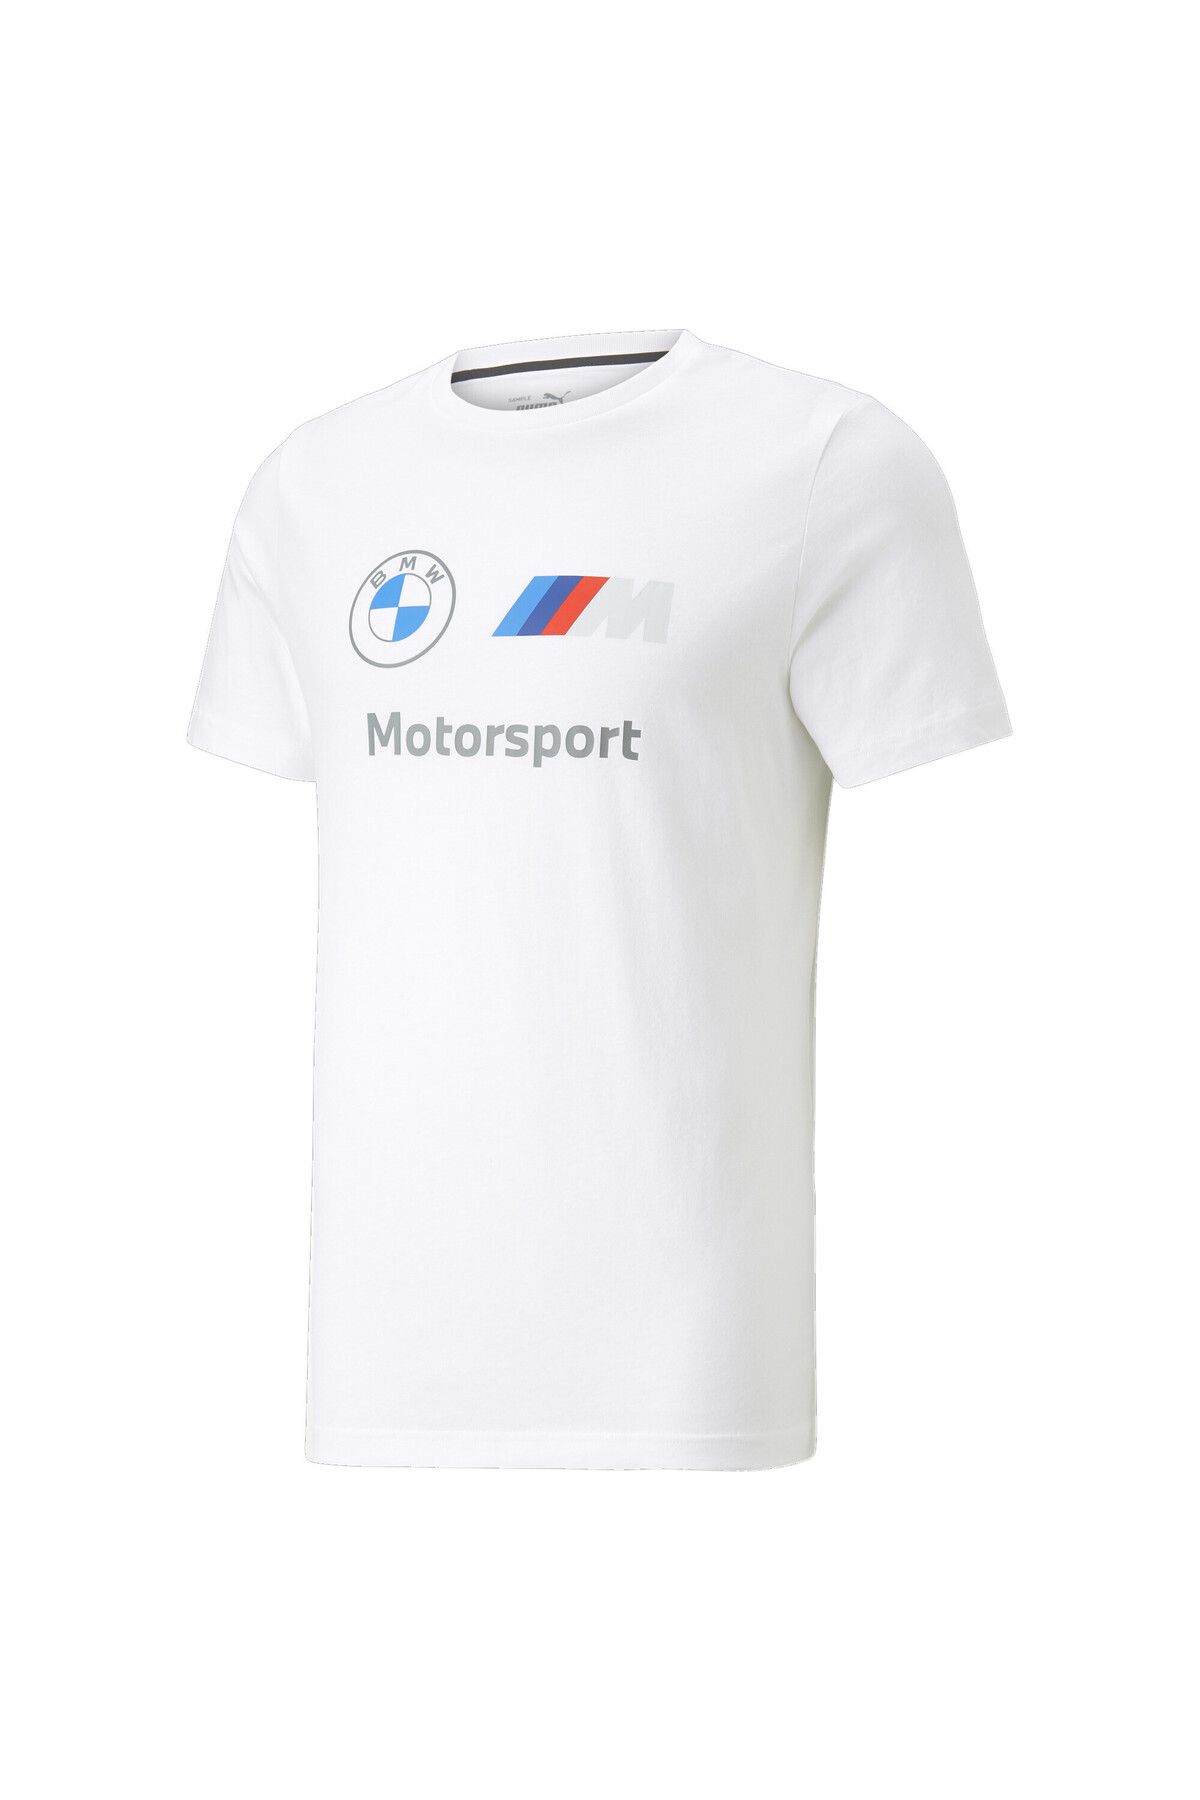 Puma Bmw M Motorsport Ess Logo Tee Men's T-Shirt 538148-02 White - Trendyol